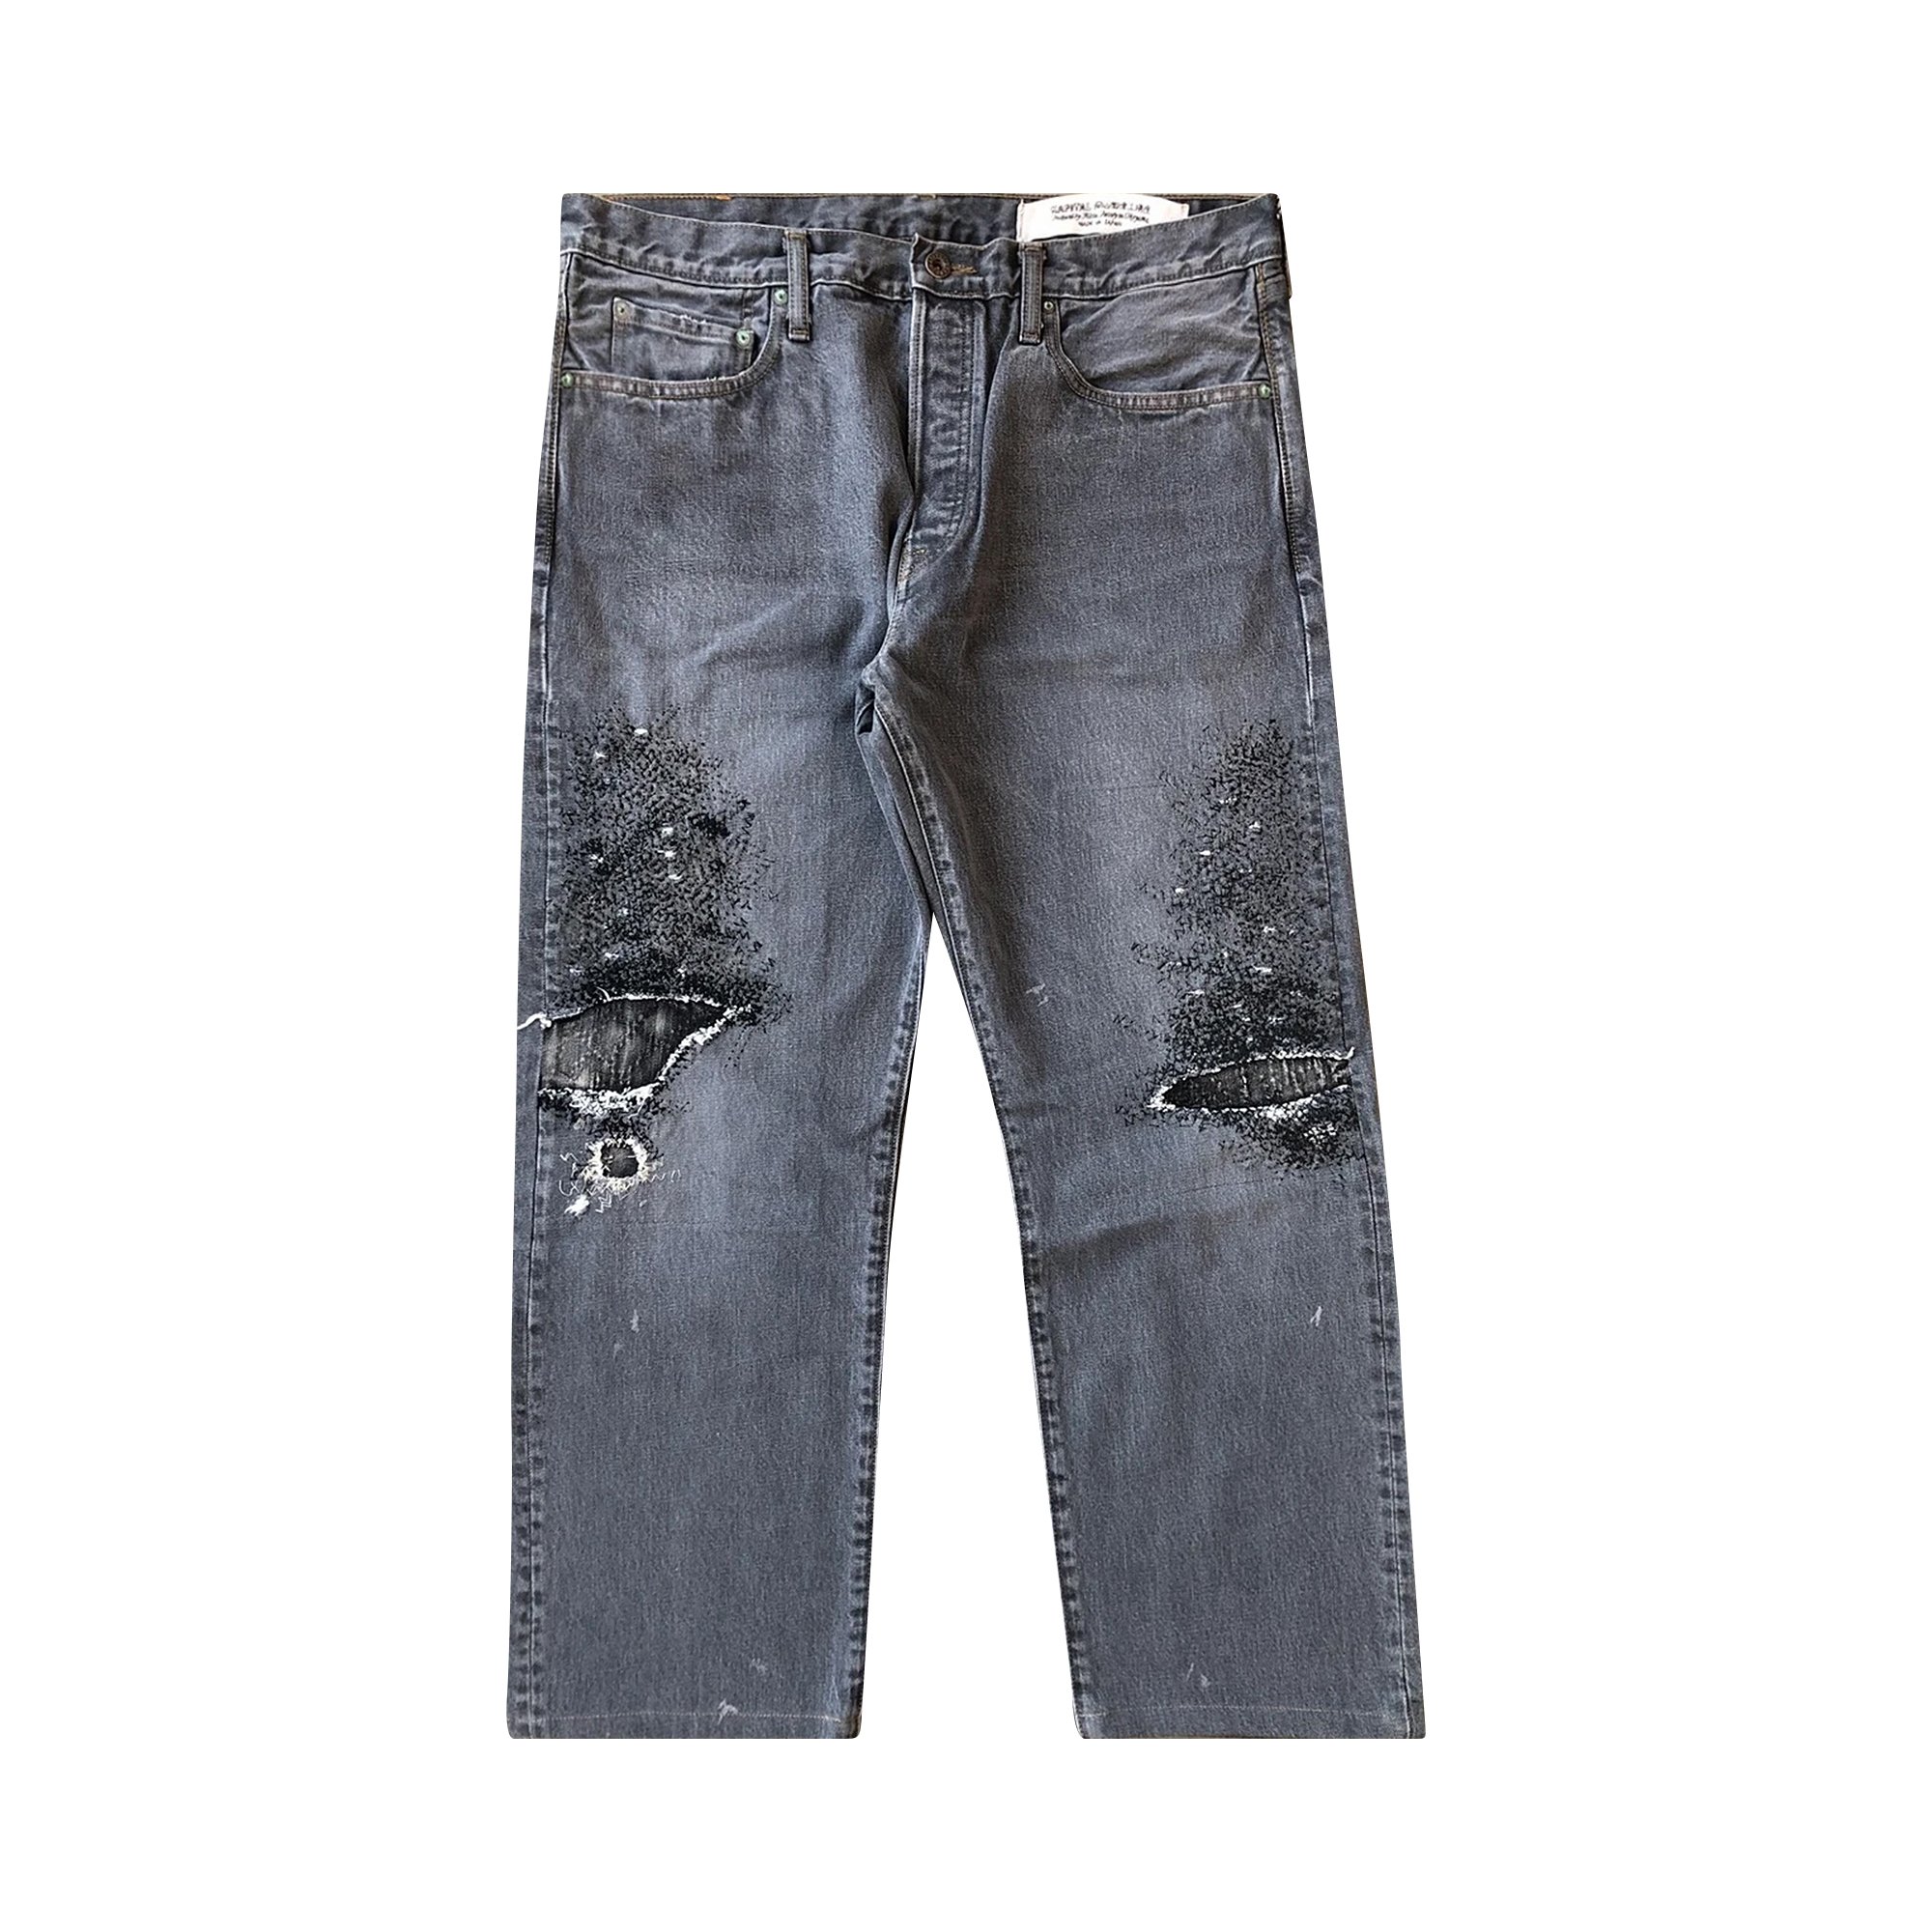 Buy Kapital Cisco Sashiko Jeans 'Black' - K1810LP164 BLAC | GOAT